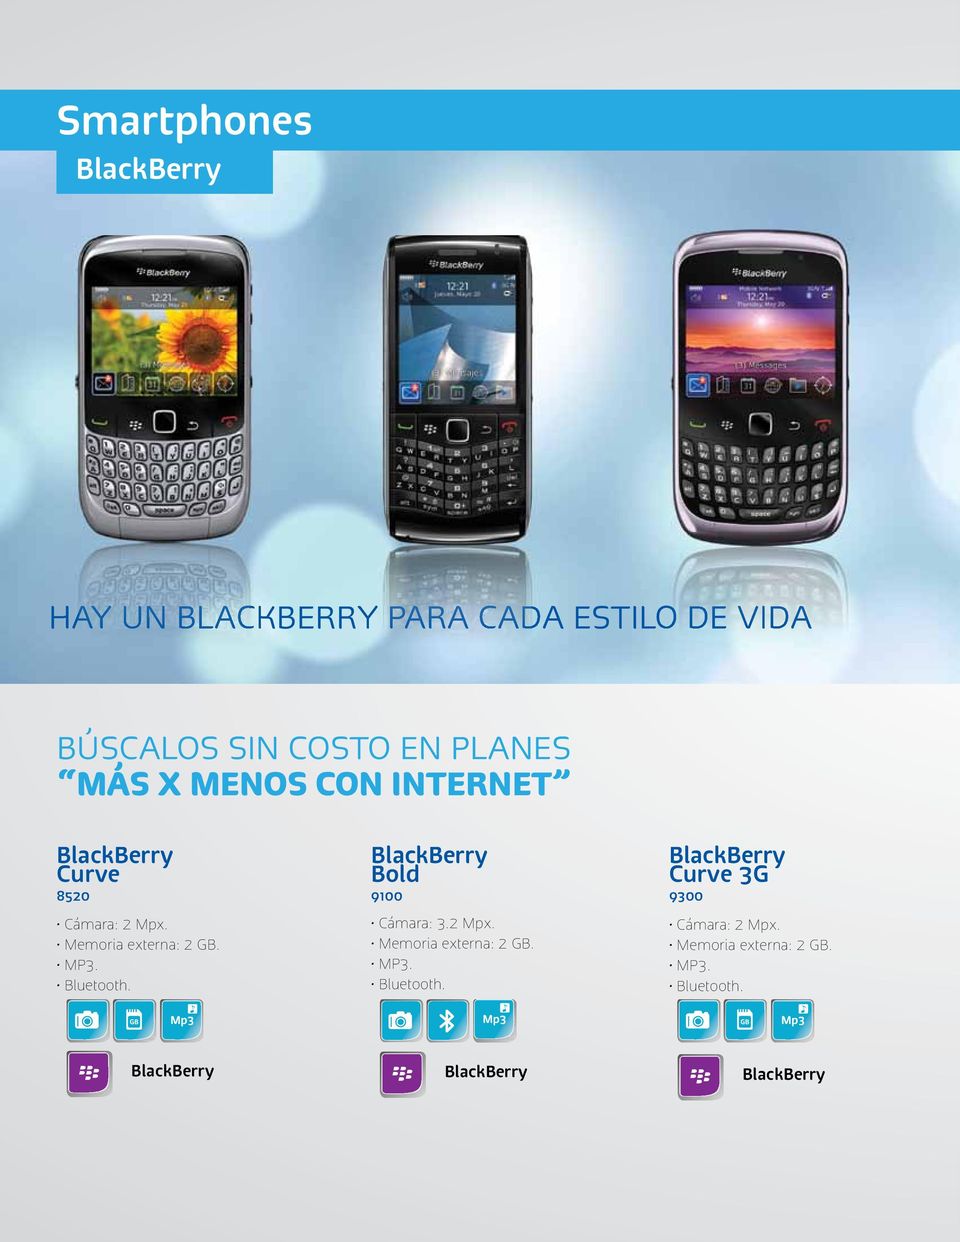 Memoria externa: 2 GB. BlackBerry Bold 9100 Cámara: 3.2 Mpx. Memoria externa: 2 GB.